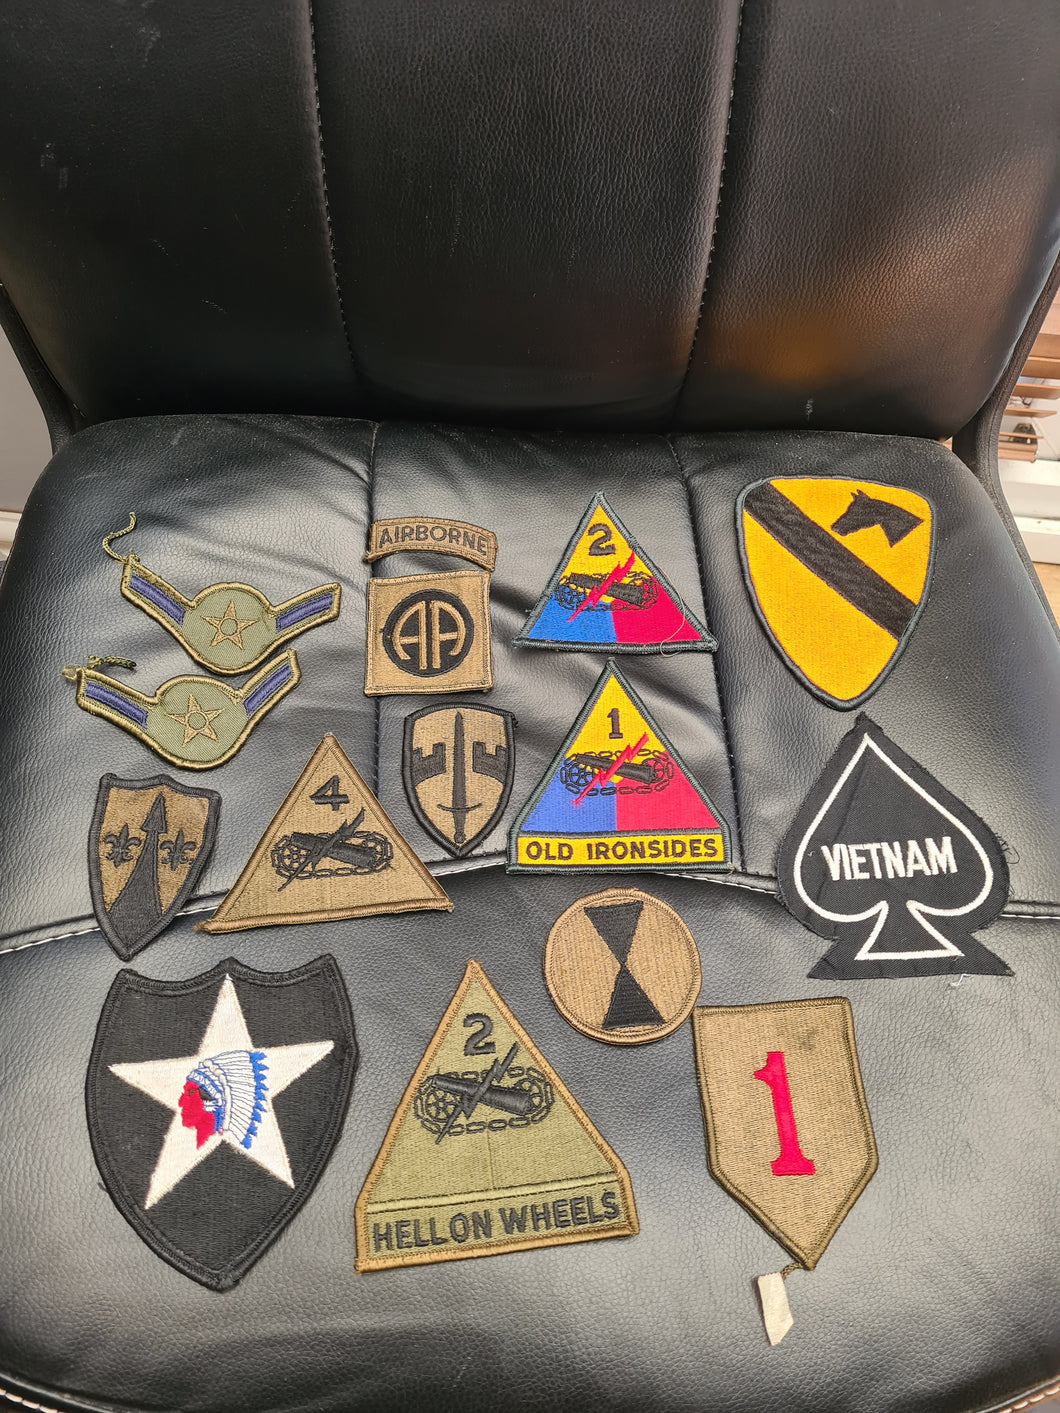 US Vietnam war era shoulder sleeve insignia